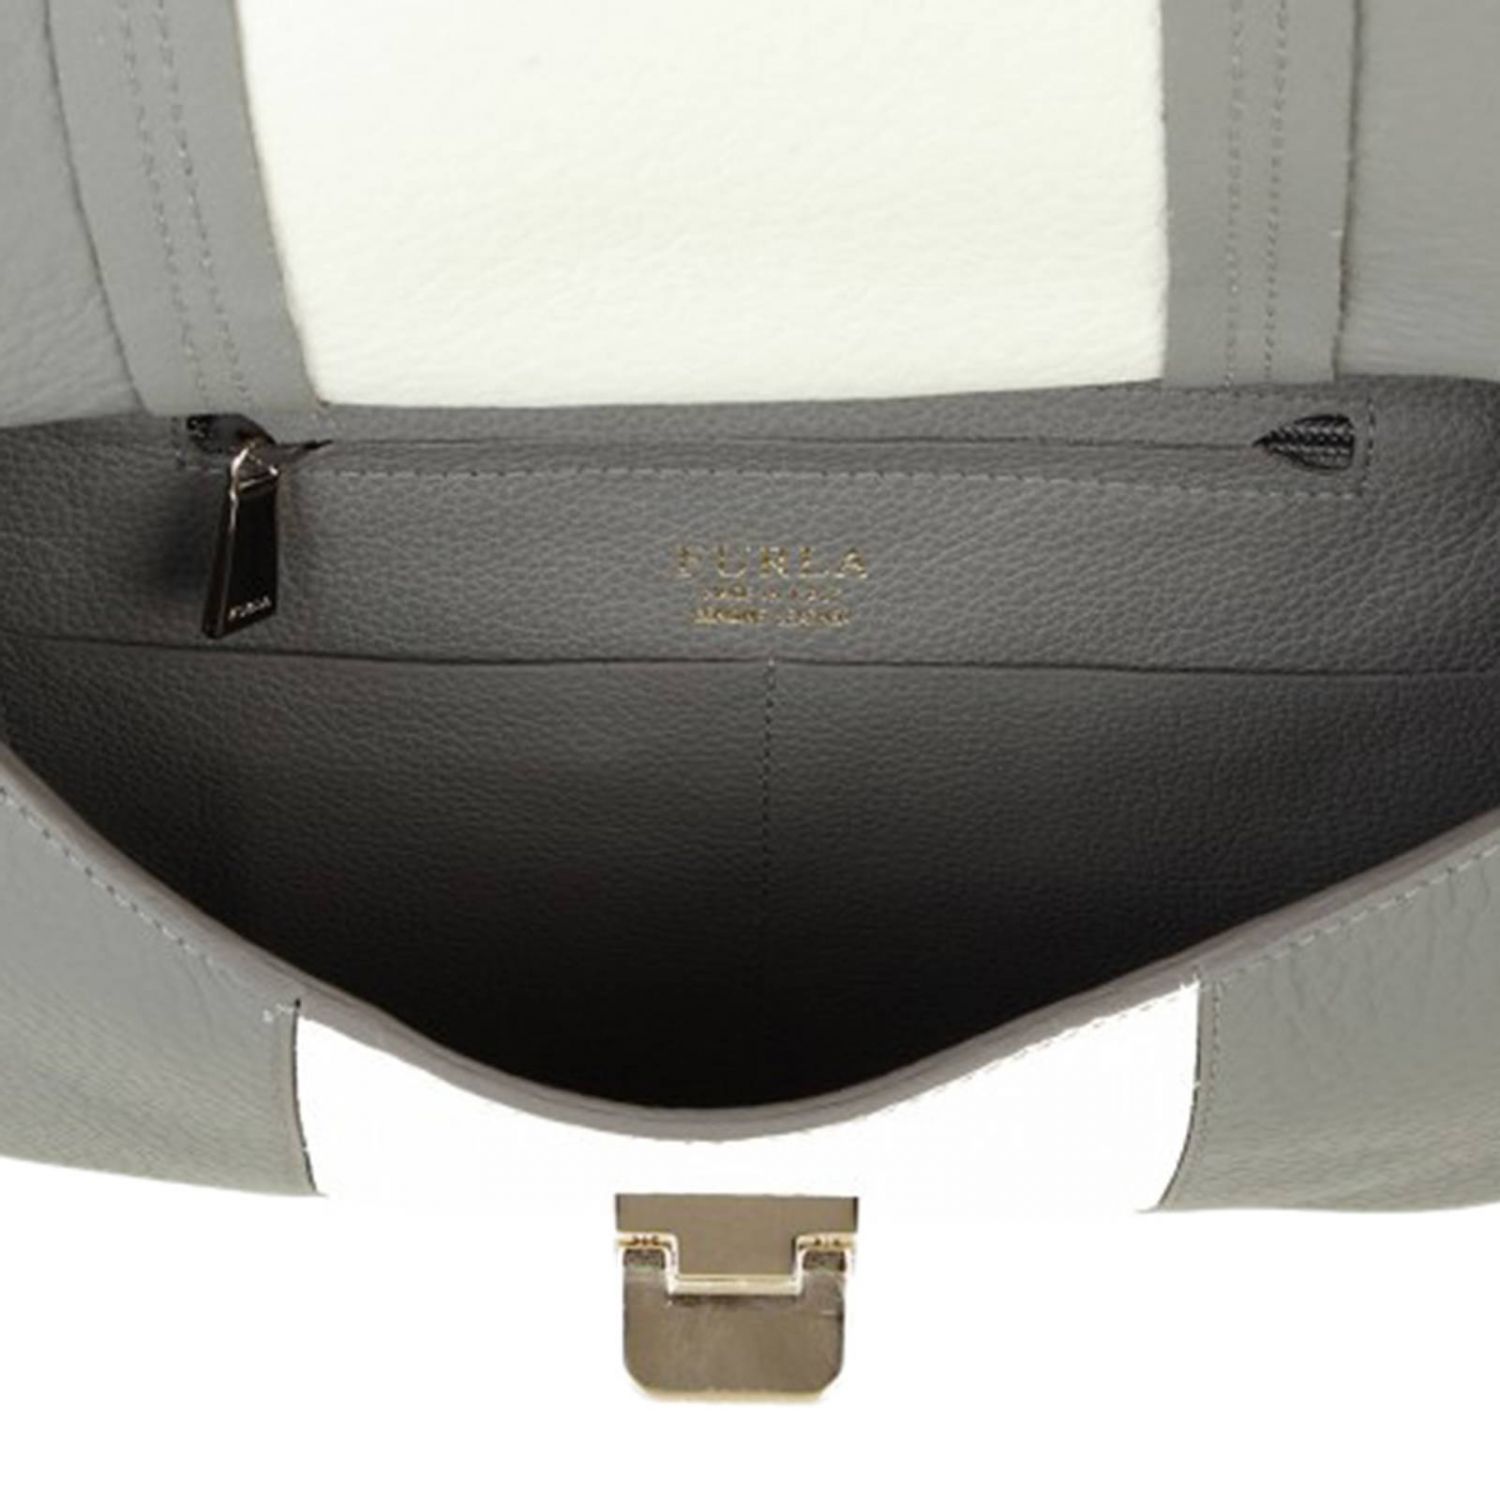 Furla Outlet: Shoulder bag women - Sand | Handbag Furla 902990 GIGLIO.COM